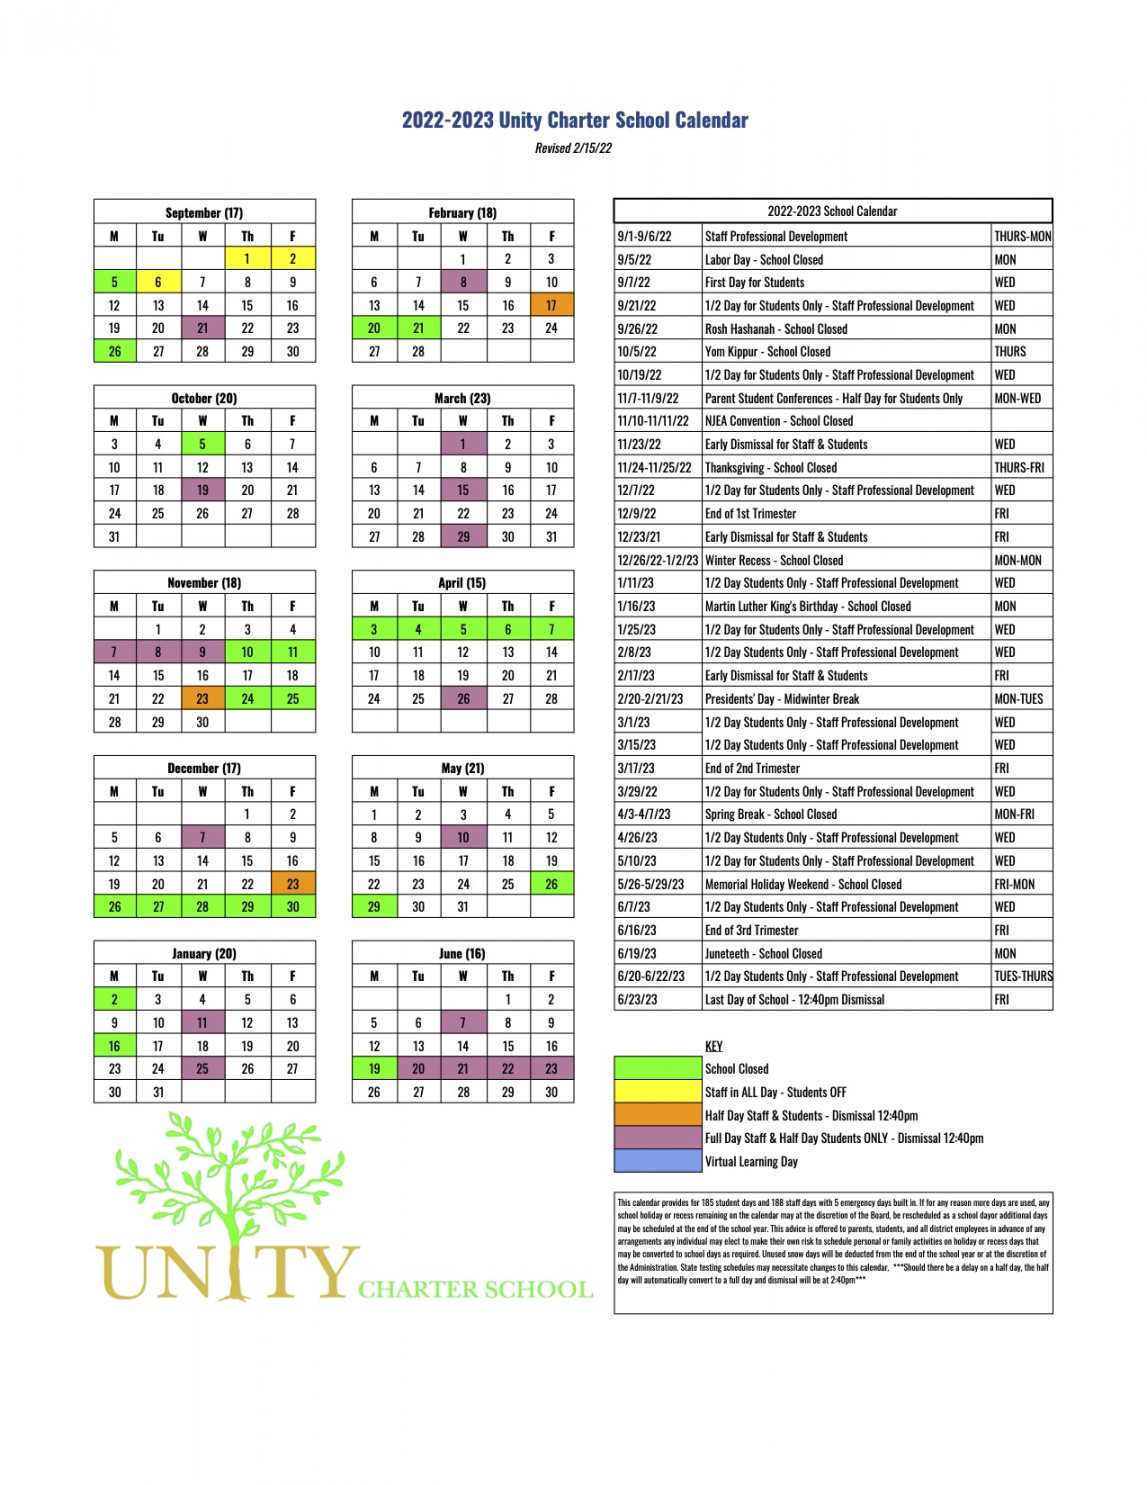 Announcing the - calendar - Unity Charter School